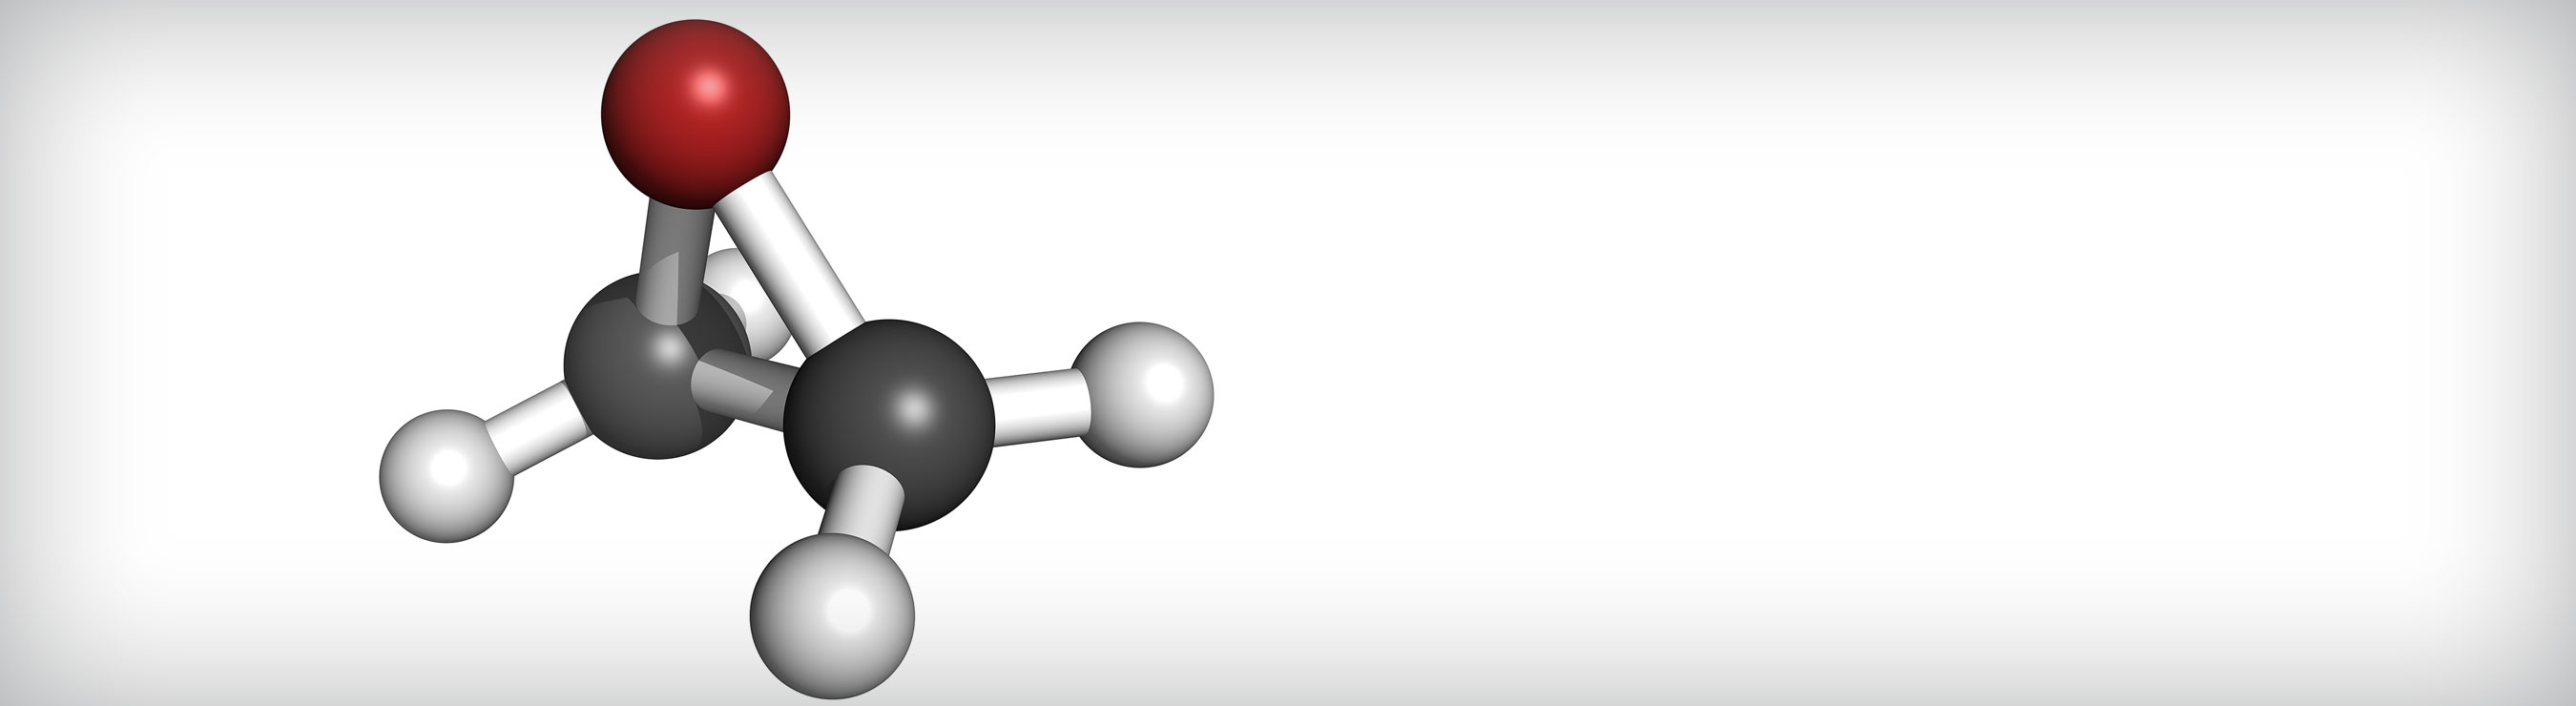 Ethylene Oxide molecule